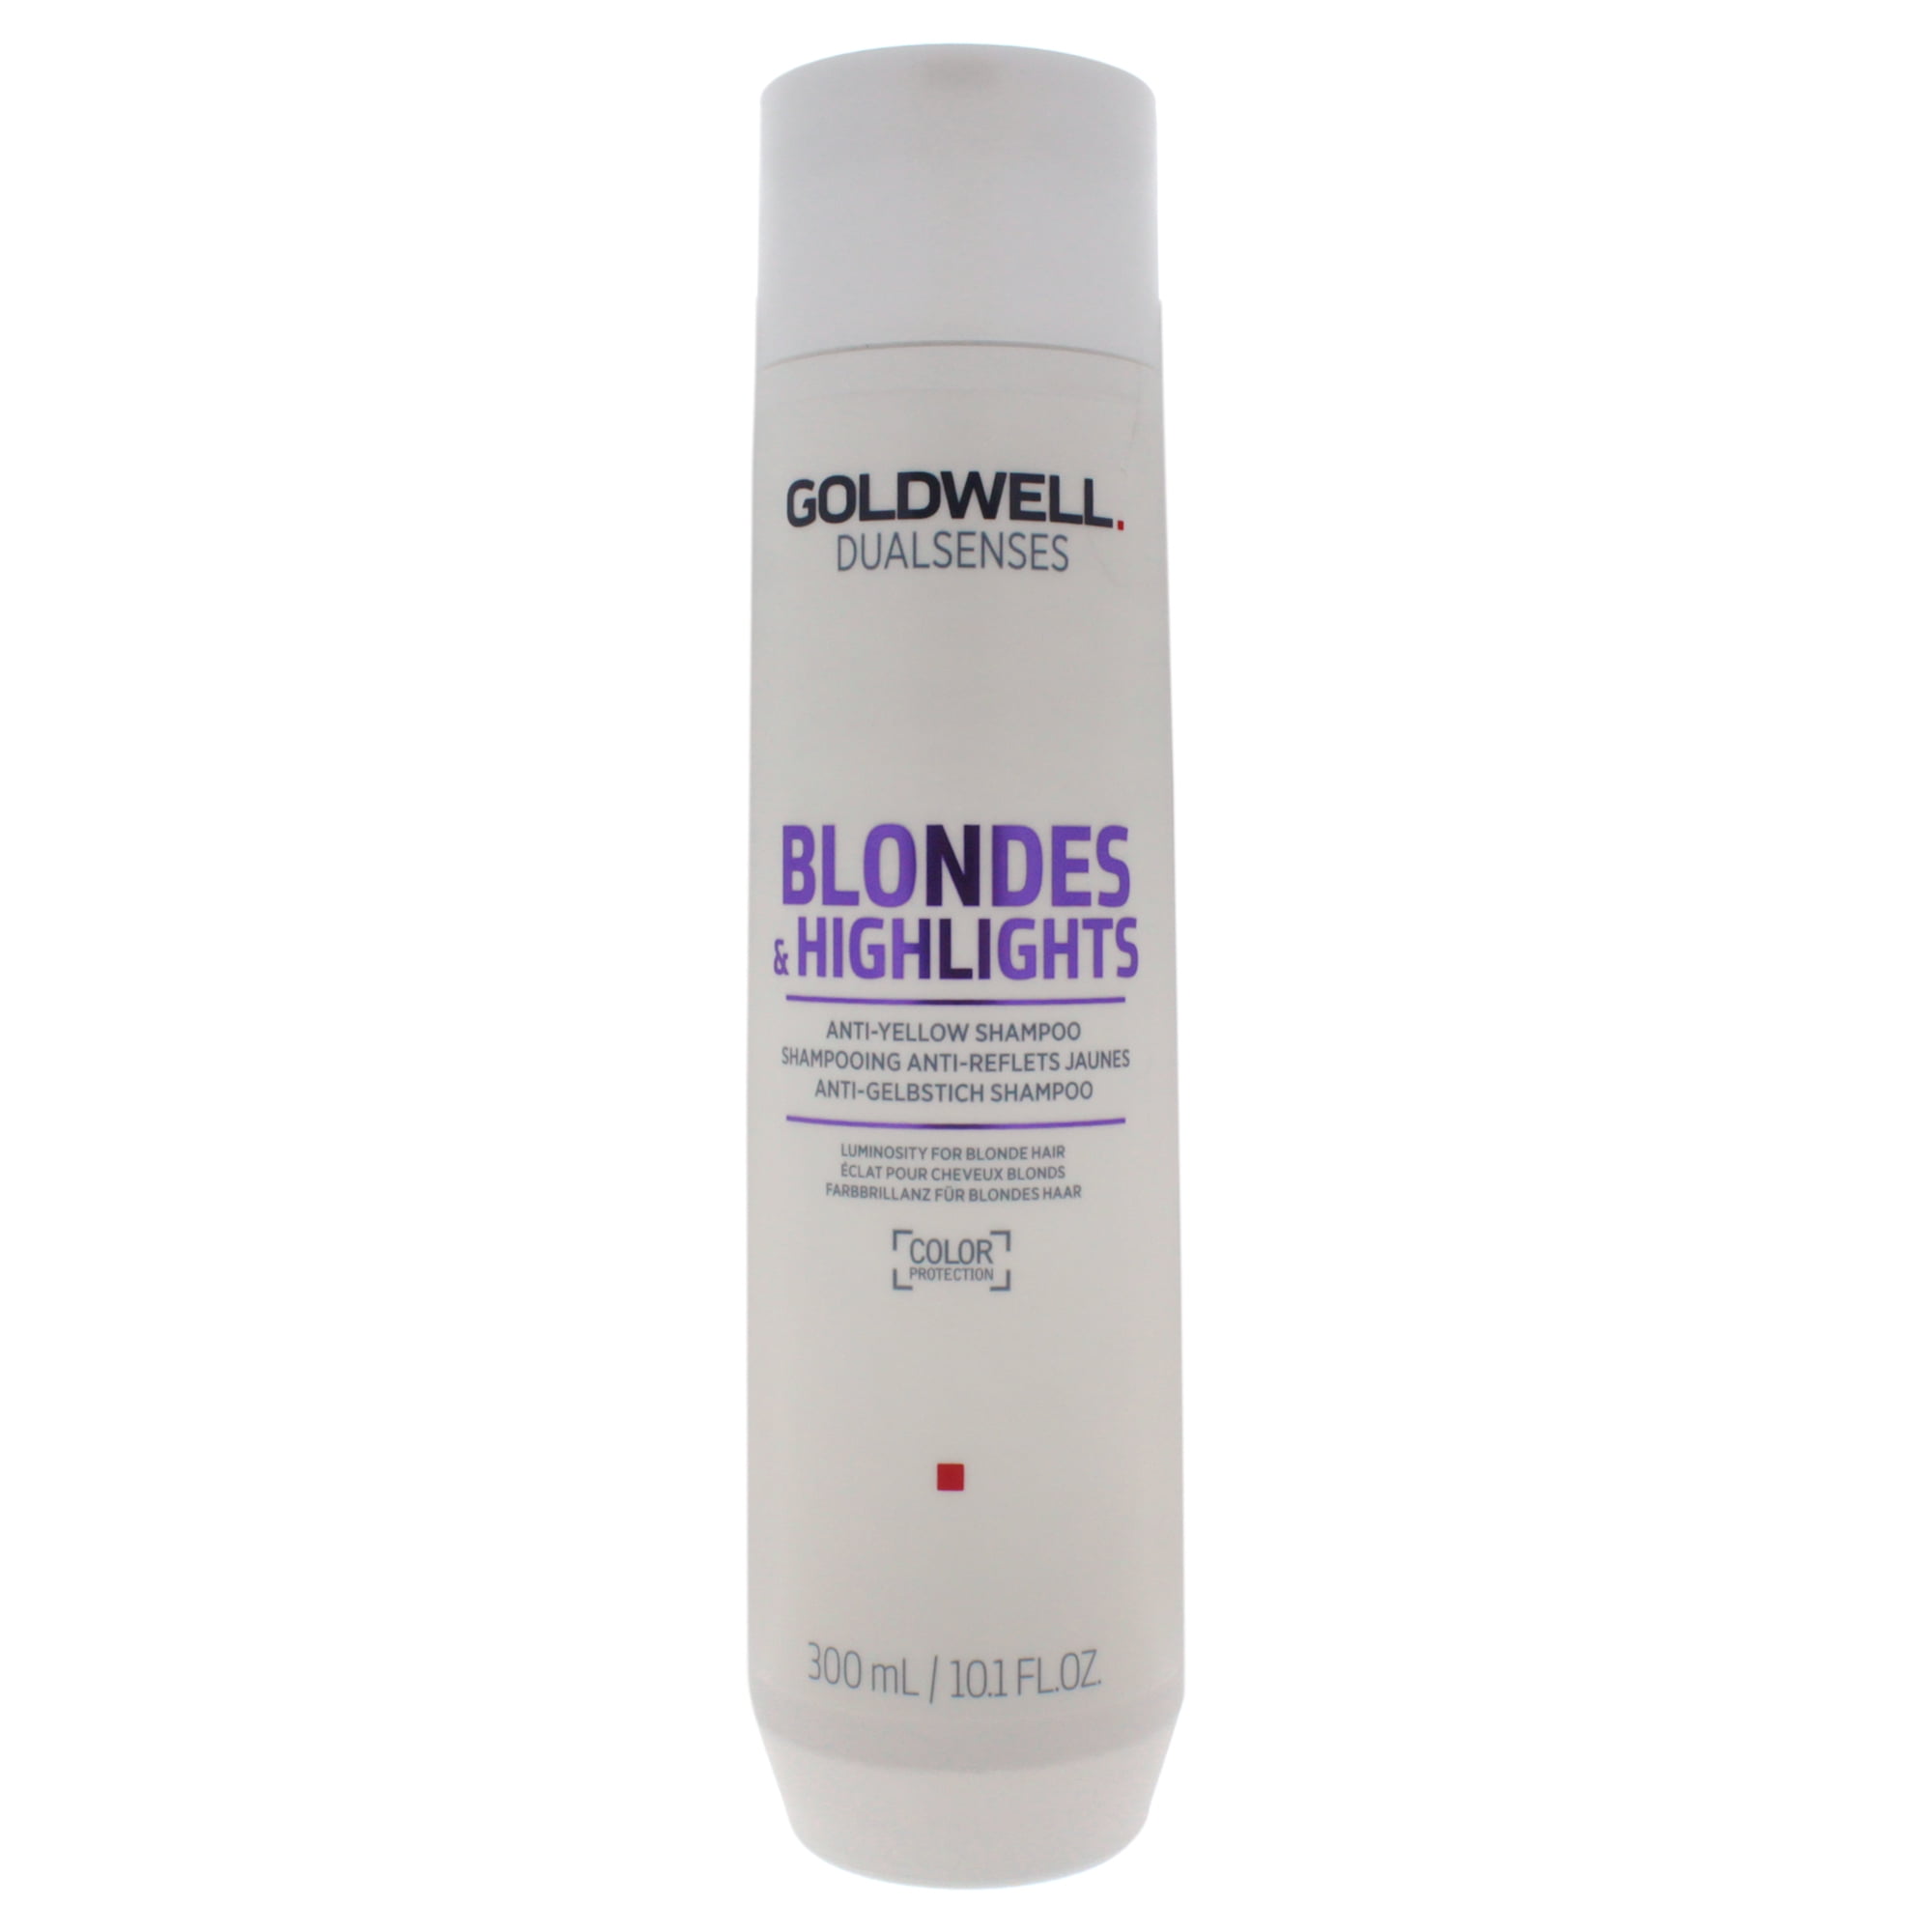 Goldwell Dualsenses Blondes Highlights Anti-Yellow Shampoo - 10.1 - Walmart.com